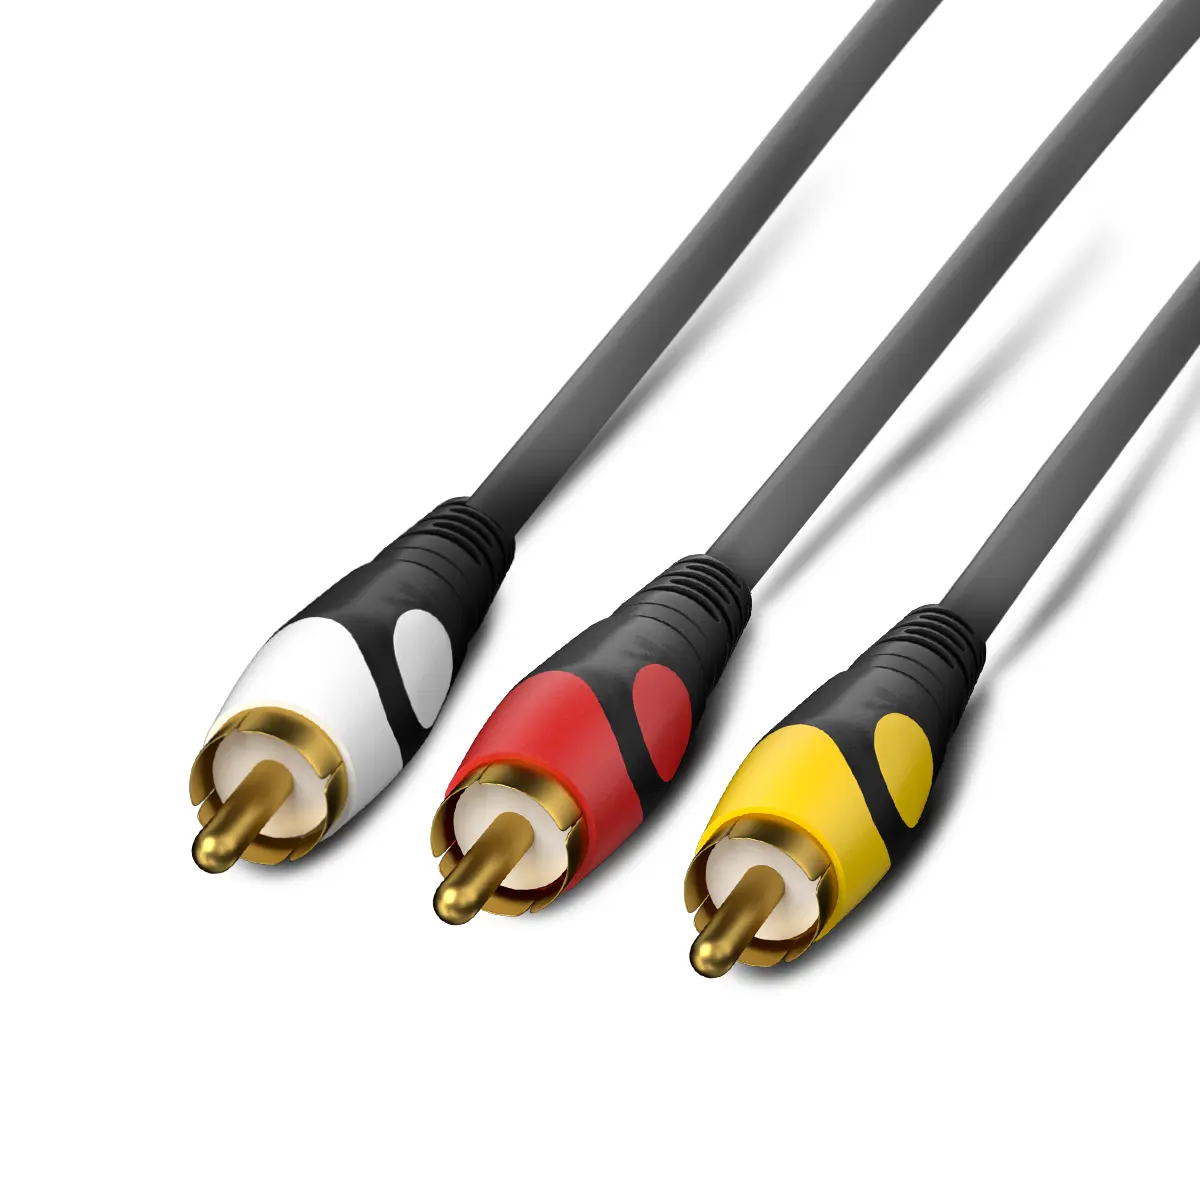 Kabel Audio Video 3 kabel Audio Stereo seri RCA ke 3RCA Male ke Male 1.5M kabel RCA